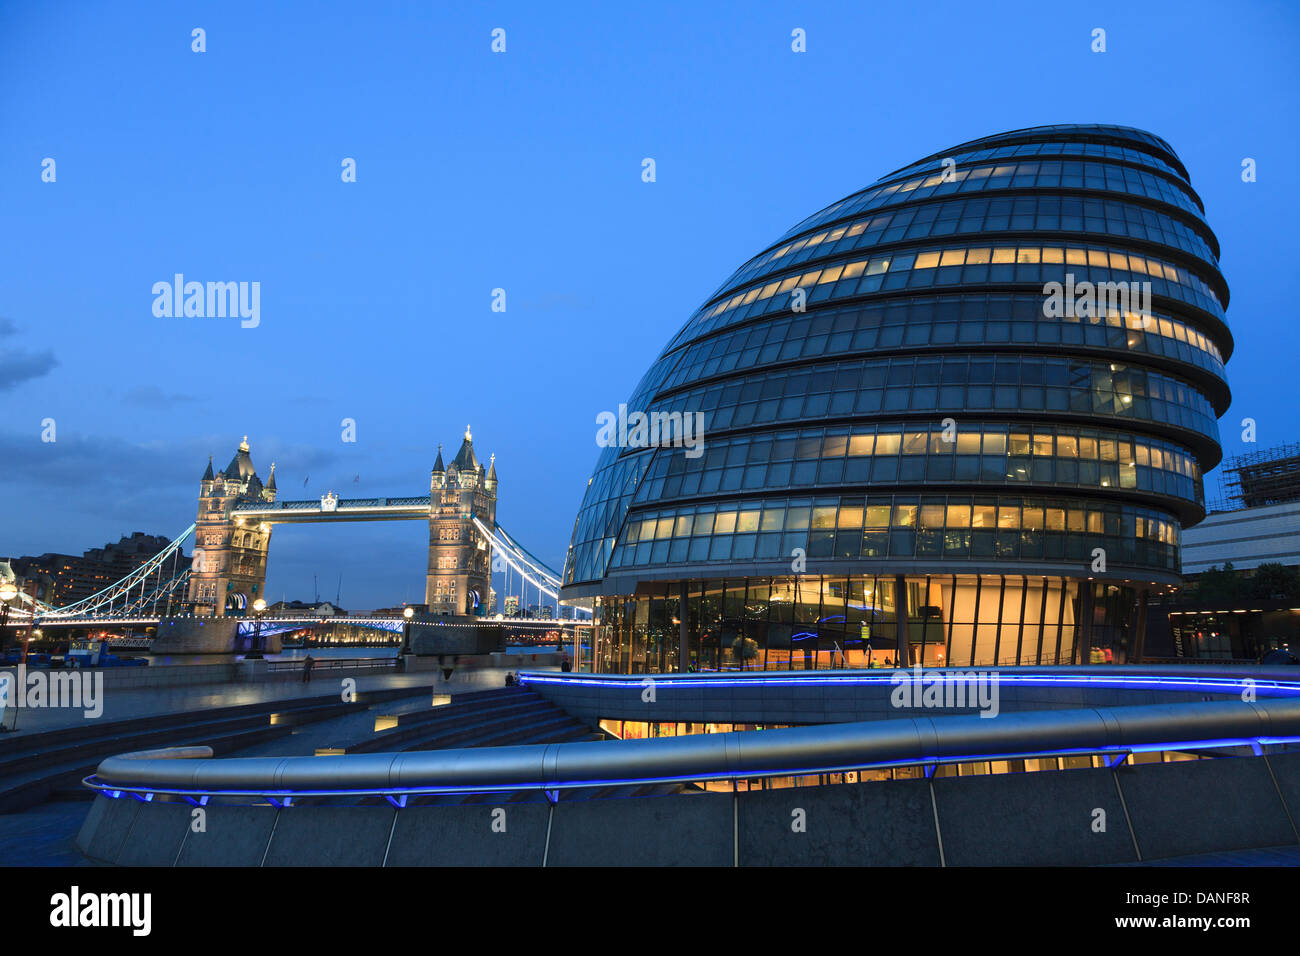 The Scoop, City Hall and Tower Bridge, London, UK Stock Photo